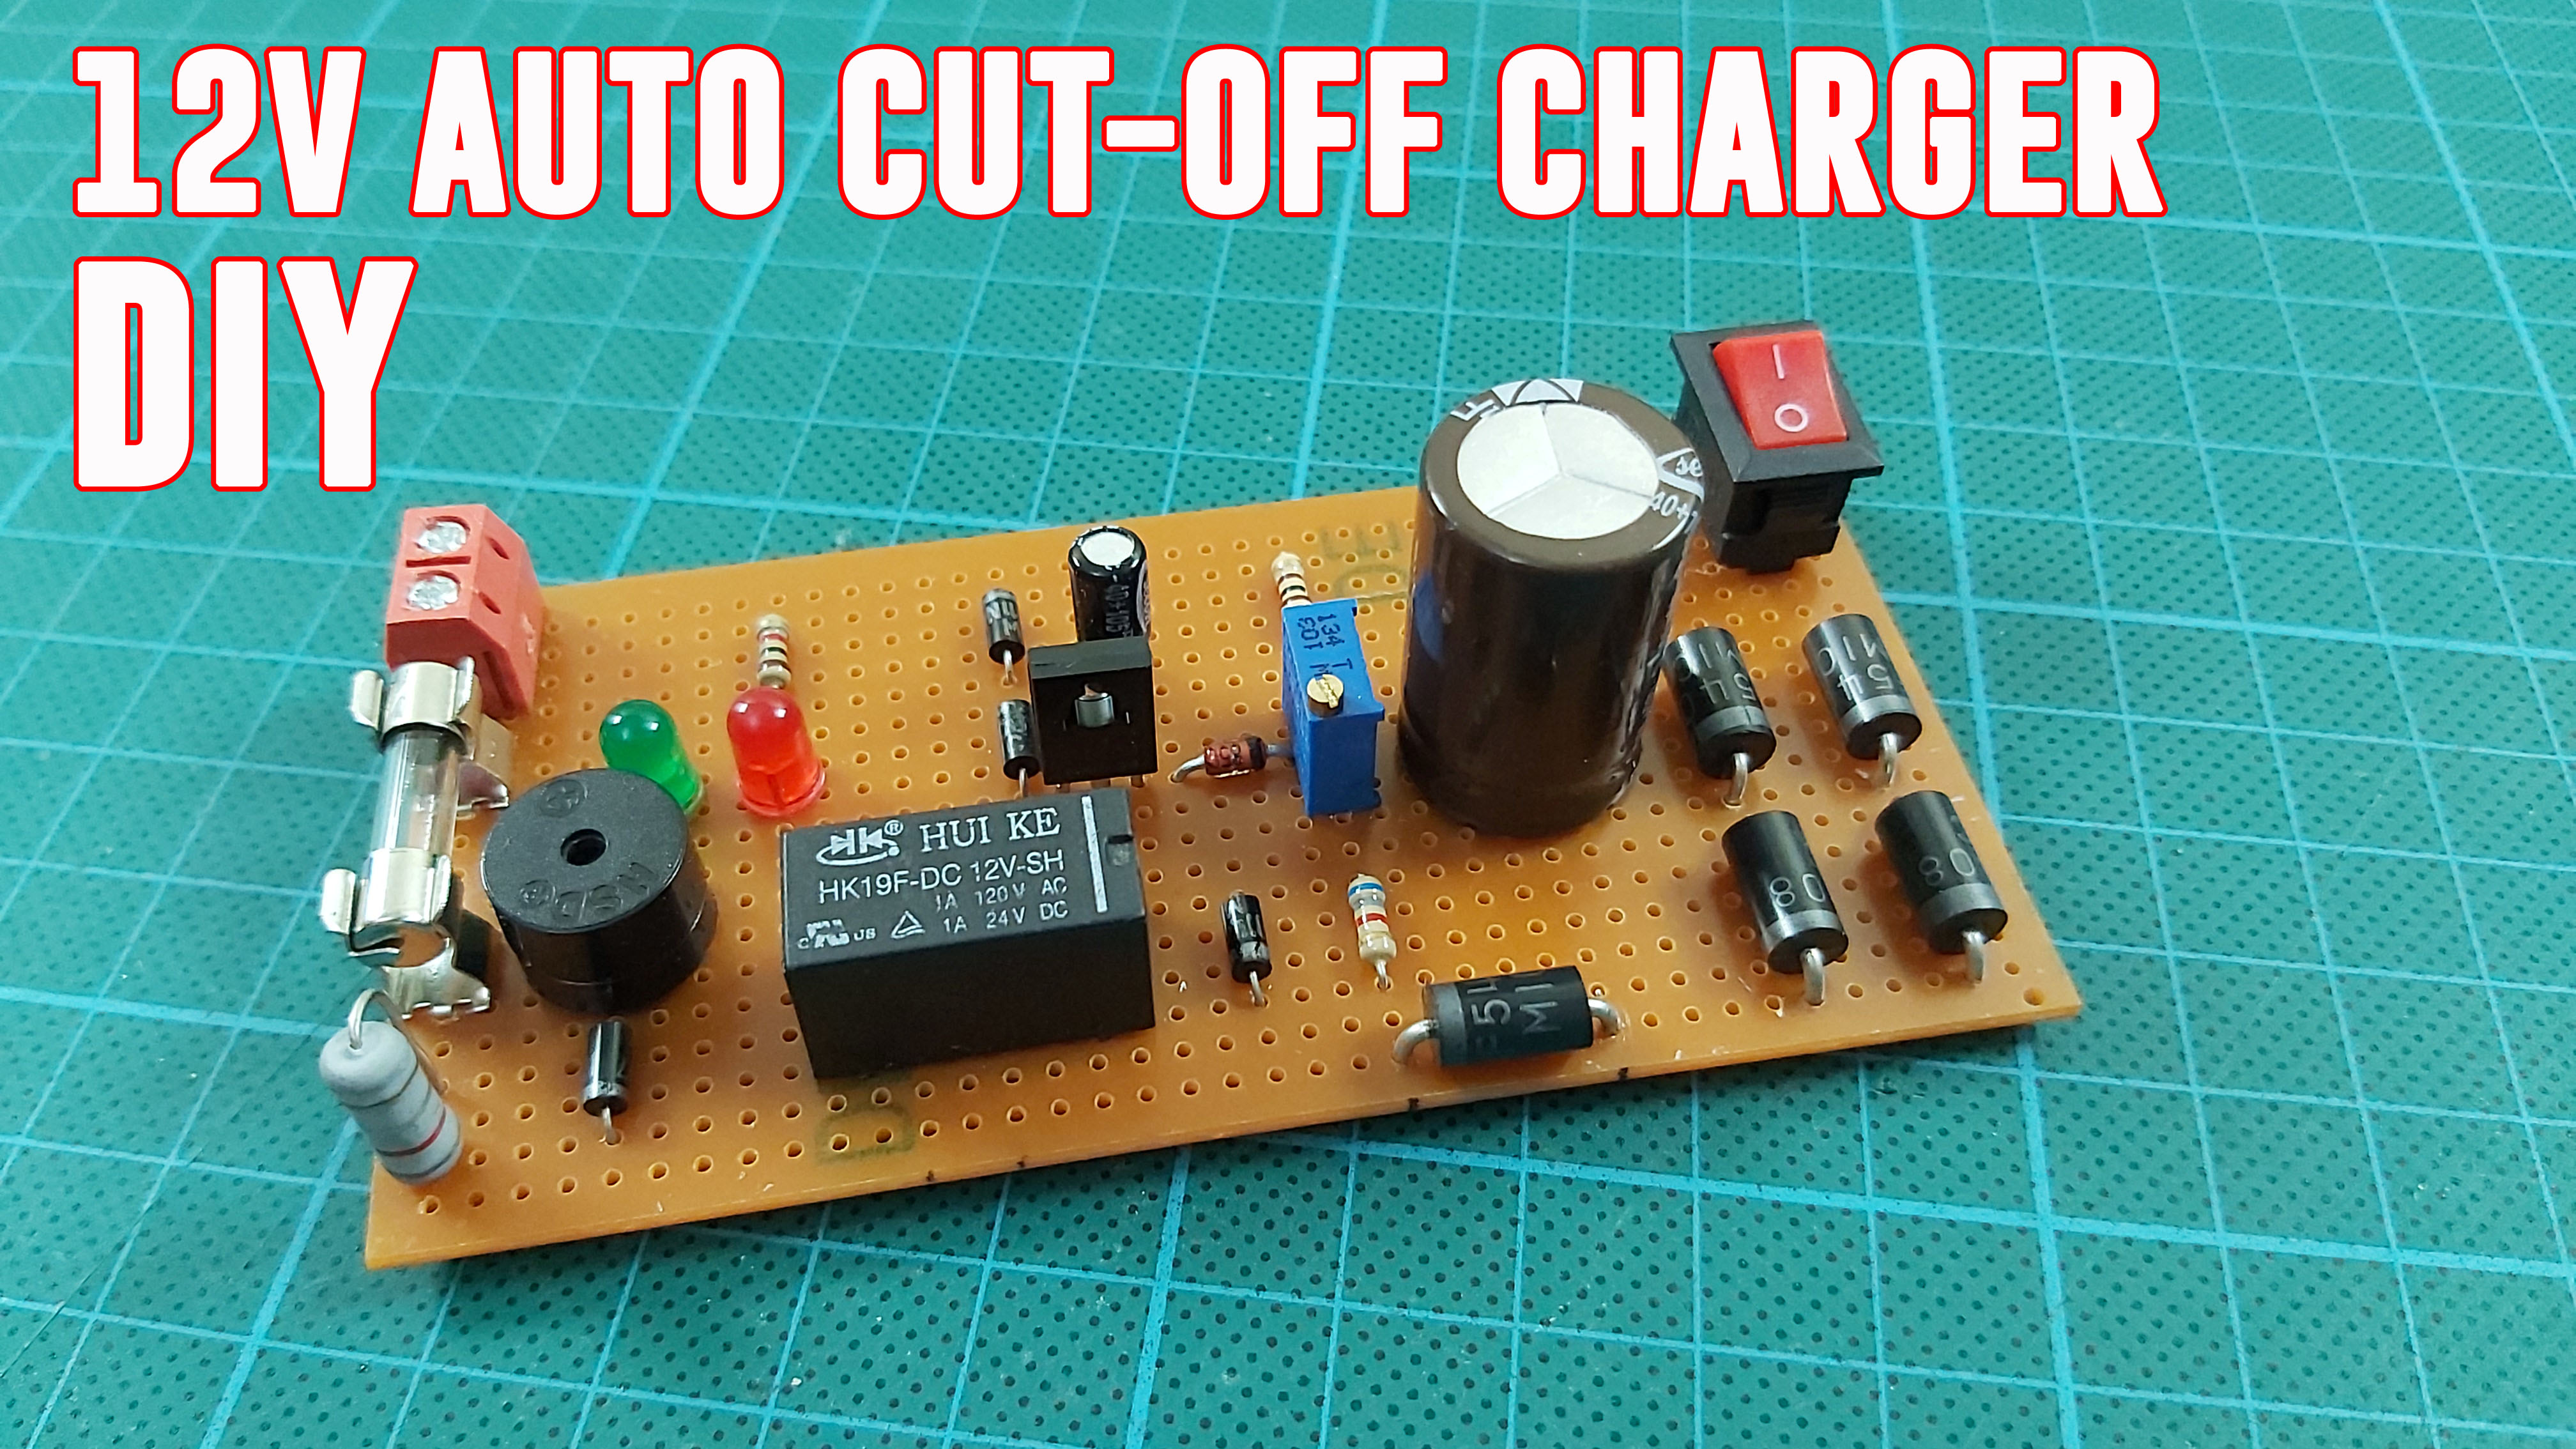 12v Lead Acid Battery Charging Circuit With Auto Cut Off Diy Pb Charger Rc Araç Yapımı Hobi Elektronik Arduino Projeler Uçak